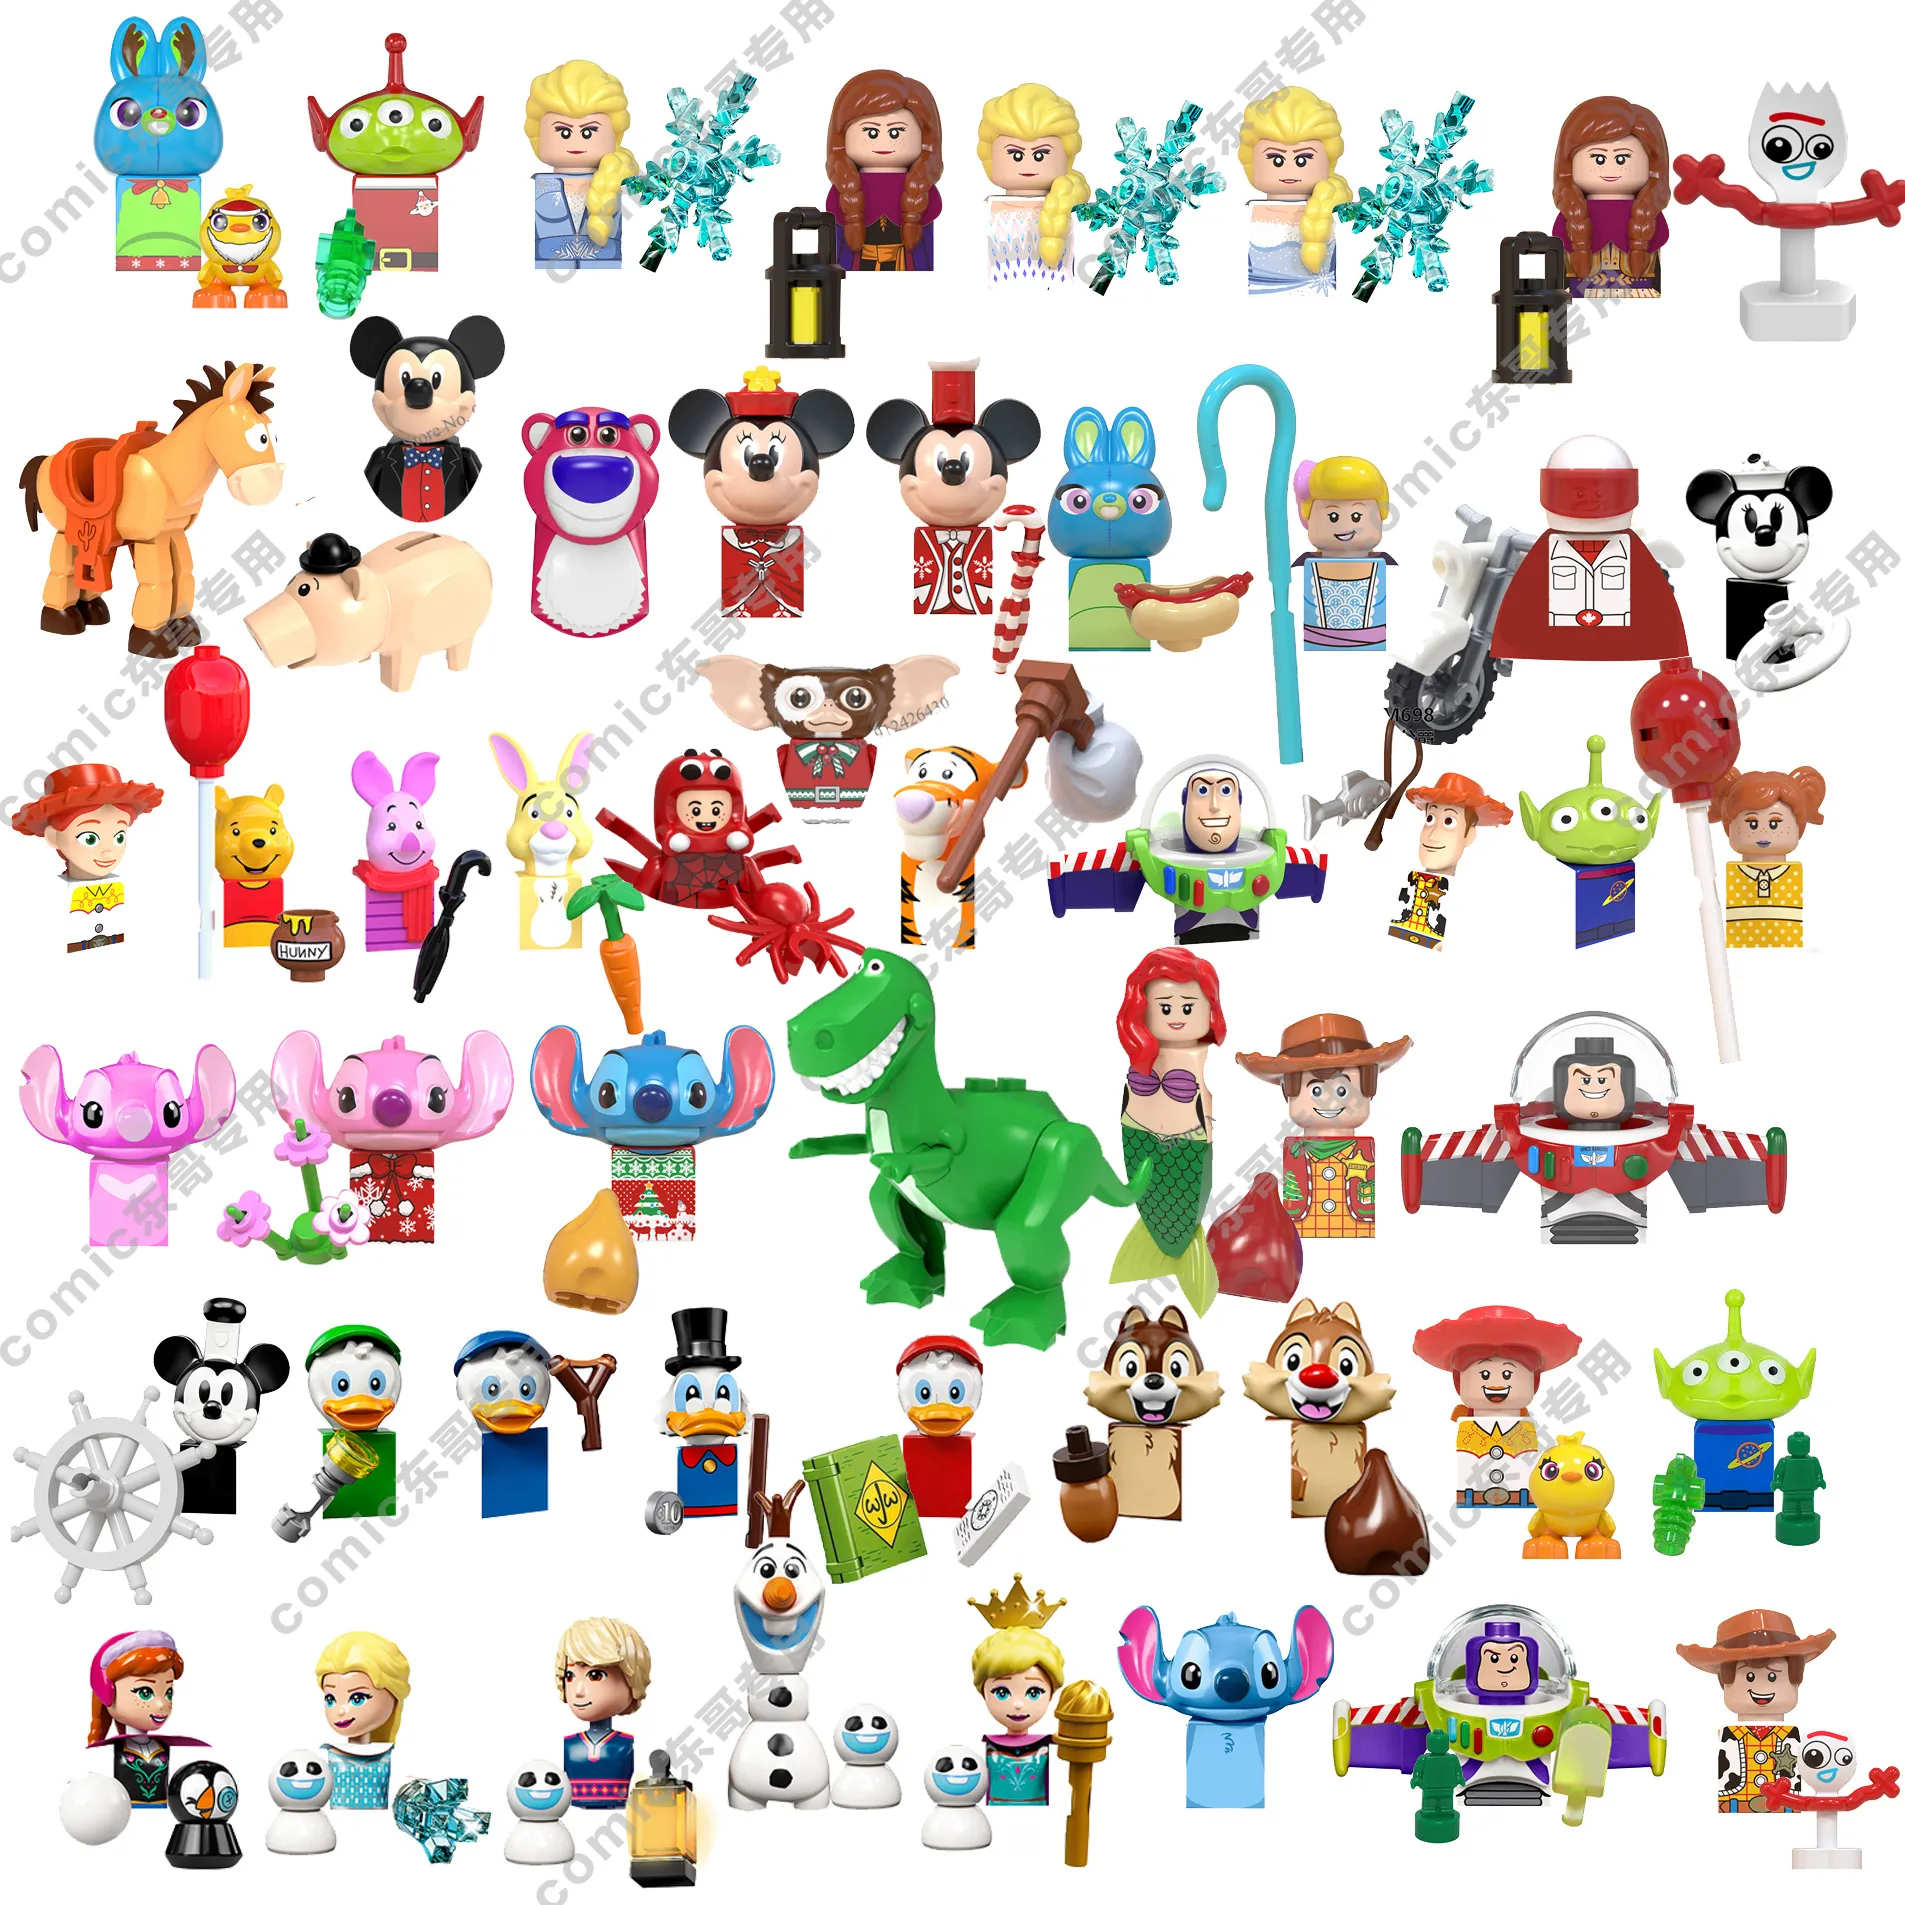 Disney-Mini figuras de acción, bloques de construcción, dibujos animados, Mickey Mouse, Winnie The Pooh, Frozen, Stitch, pato Donald